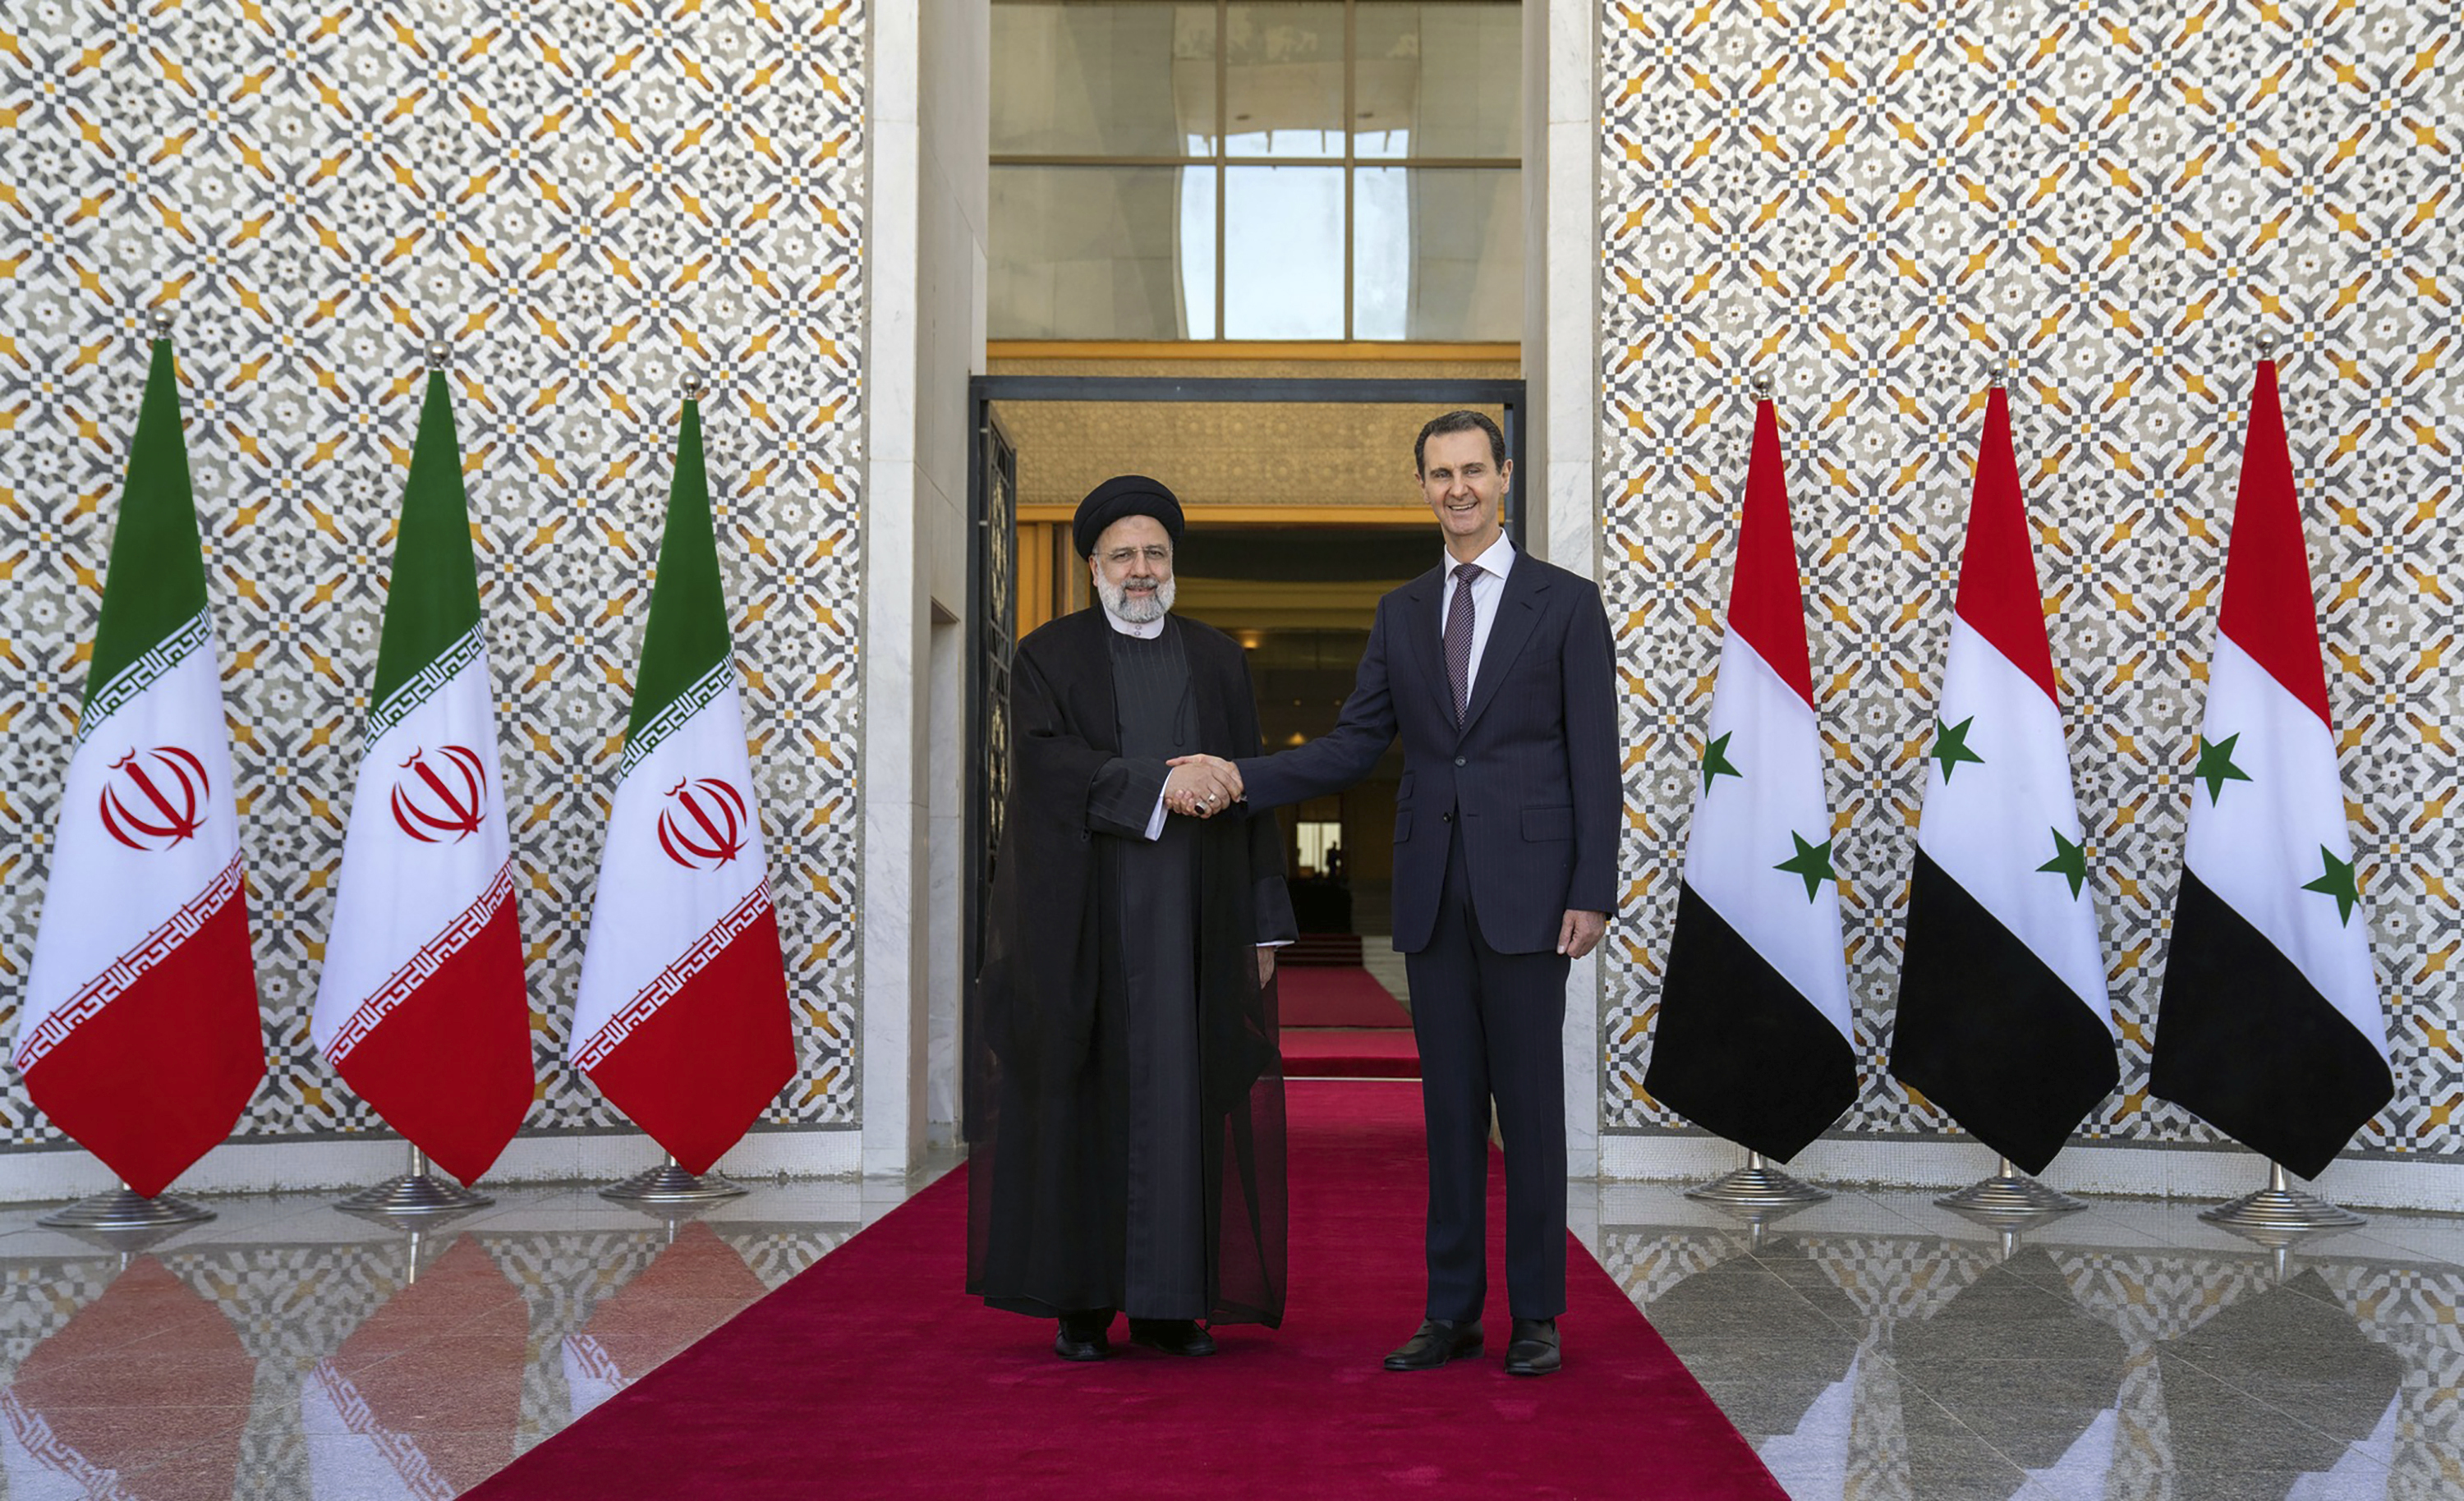 El presidente iraní Ebrahim Raisi se reunió con el dictador Bashar al Assad en Siria